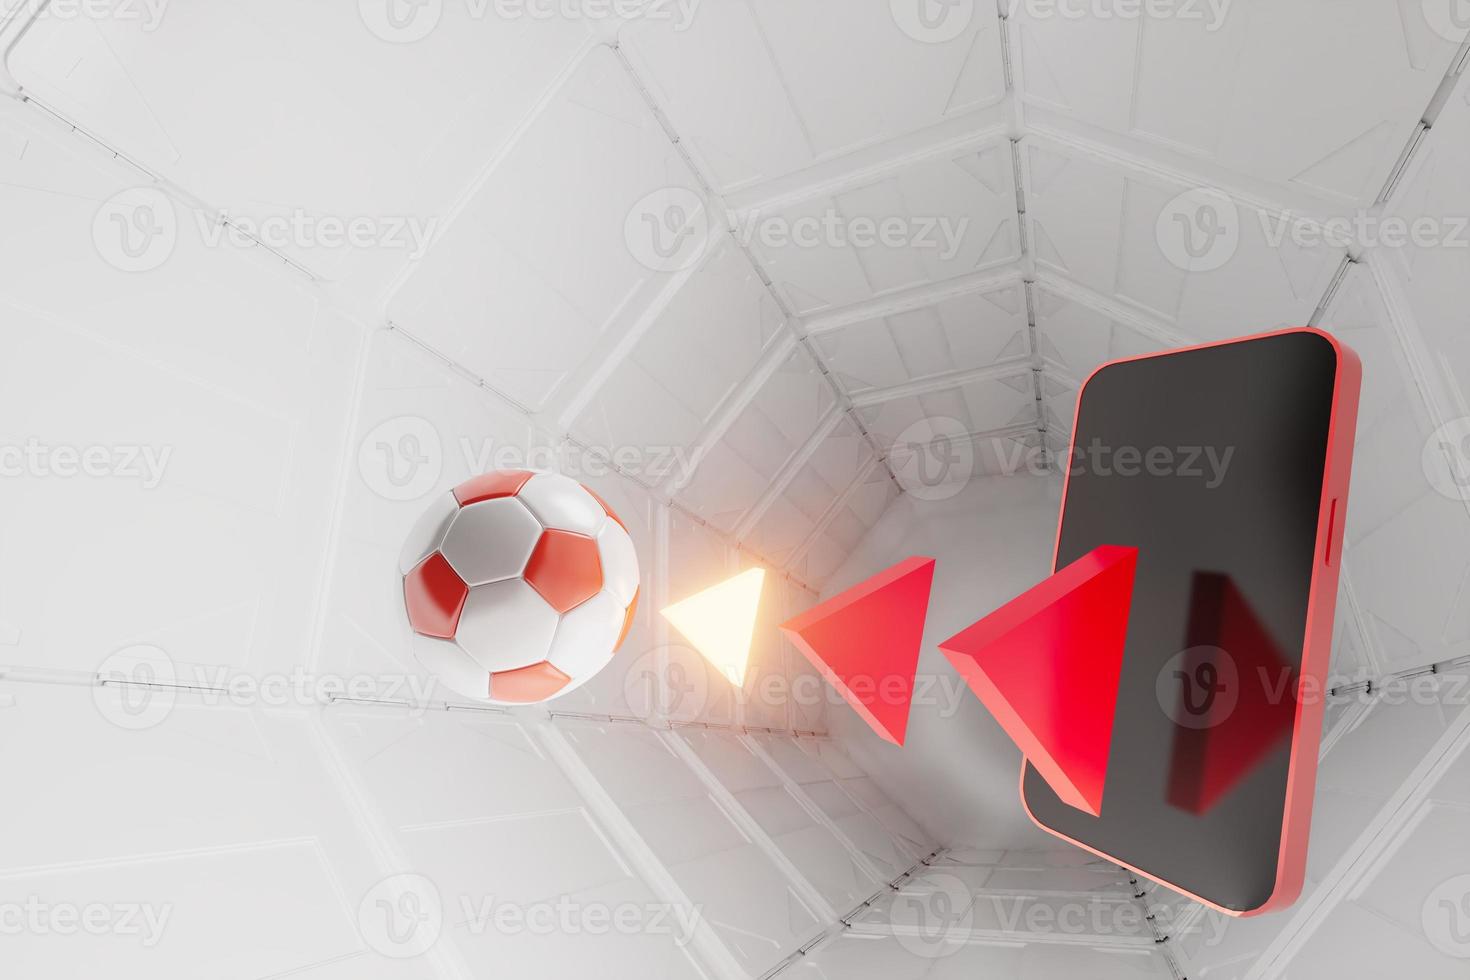 Fußballkugelobjekt, Sportballdesign, Fußballelementkonzept, 3D-Illustration, abstrakte Fußballtechnologie, mobiler Smartphone-Bildschirm, grüne Rasenfläche, Online-Sport live, Casino-Sportgeschäft foto